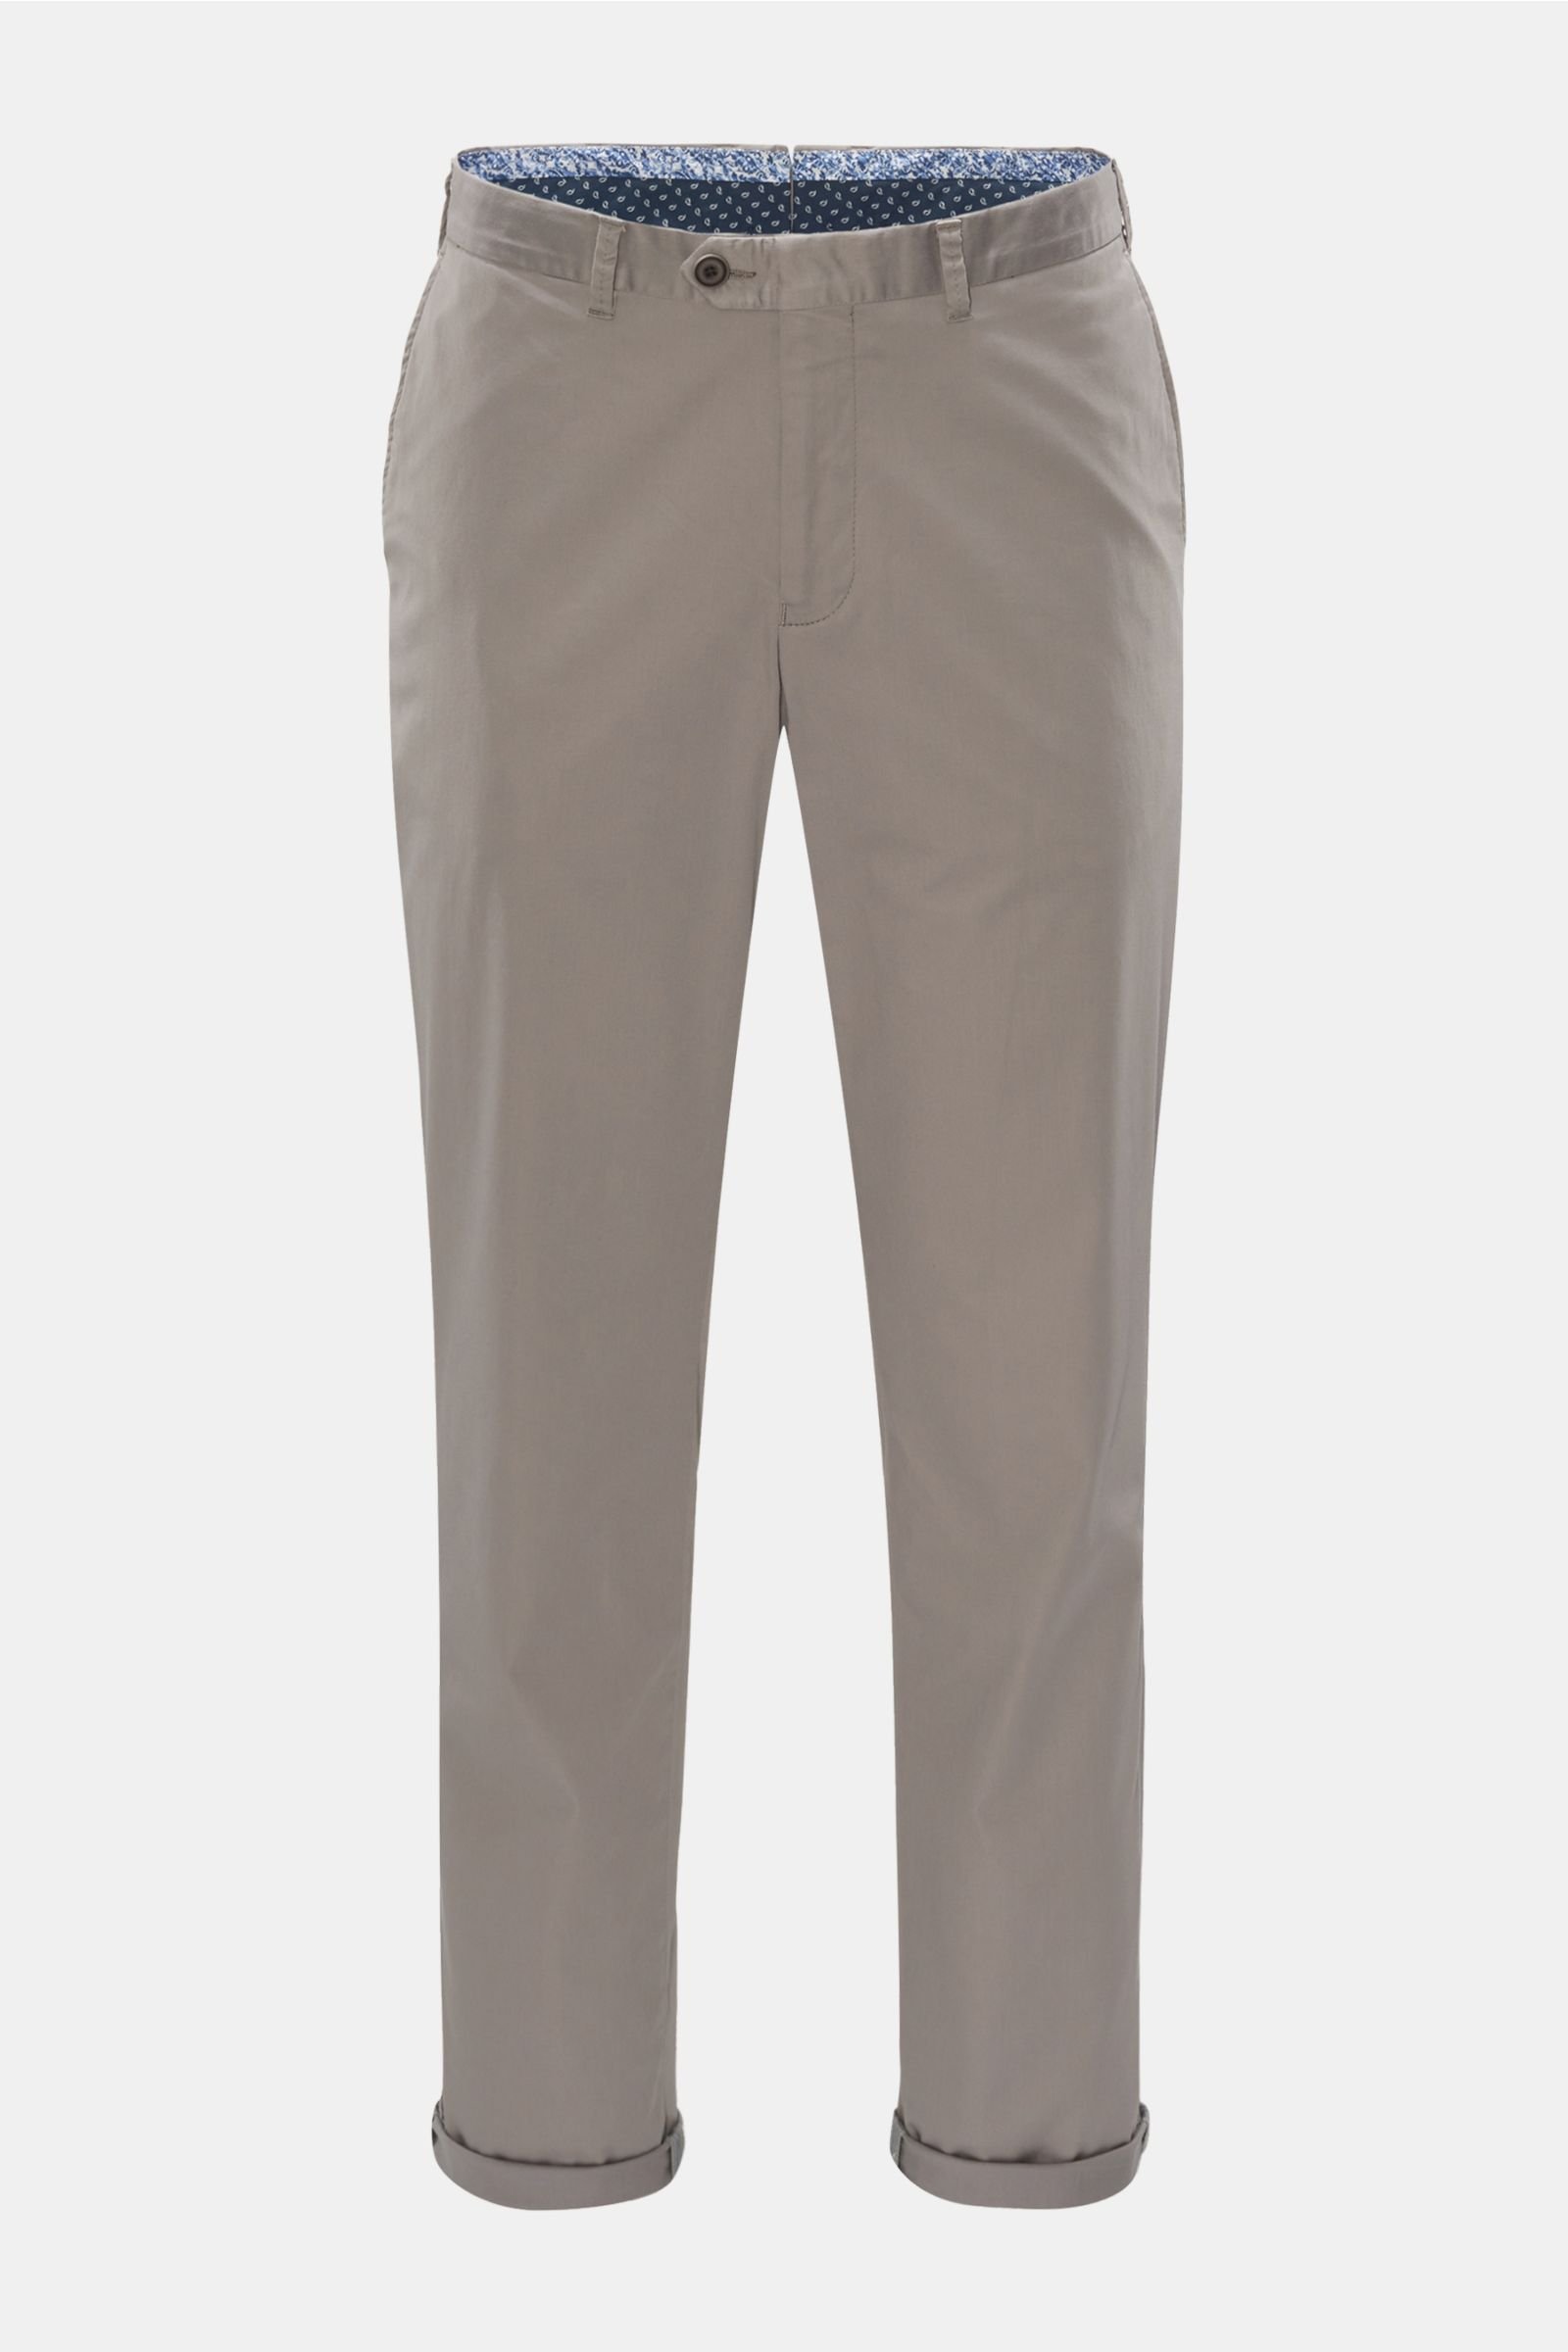 Cotton trousers 'Jasper' light grey